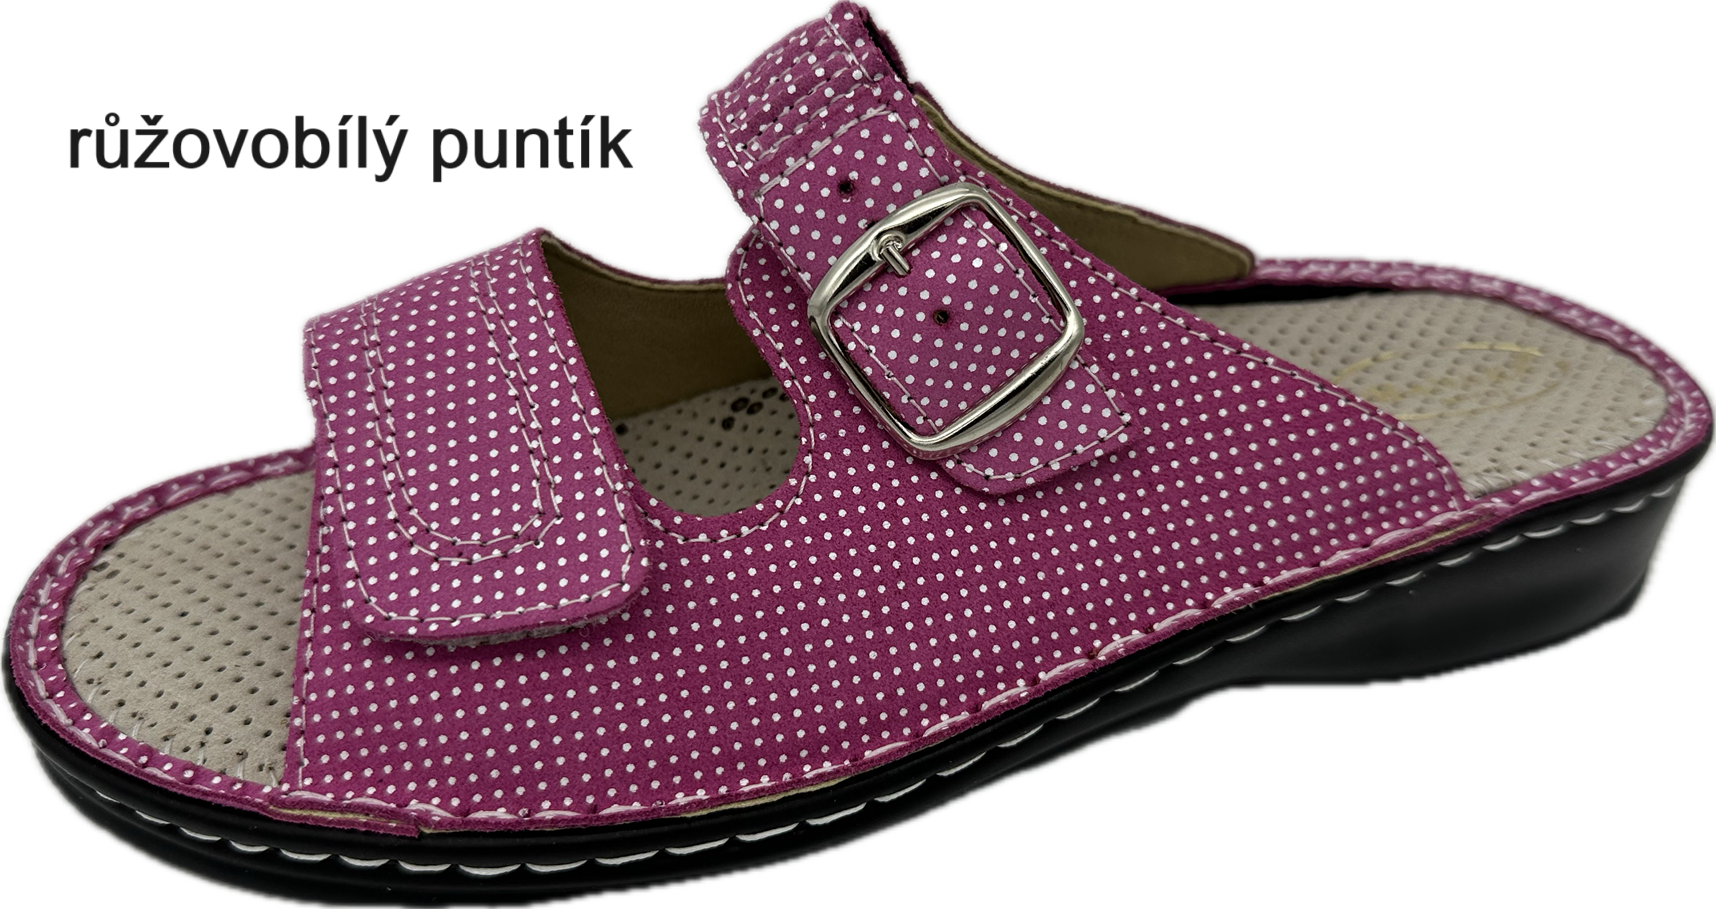 Boty Hanák vzor 305 - černá podešev Barva usně: růžovobílý puntík jemný, Velikosti obuvi: 39